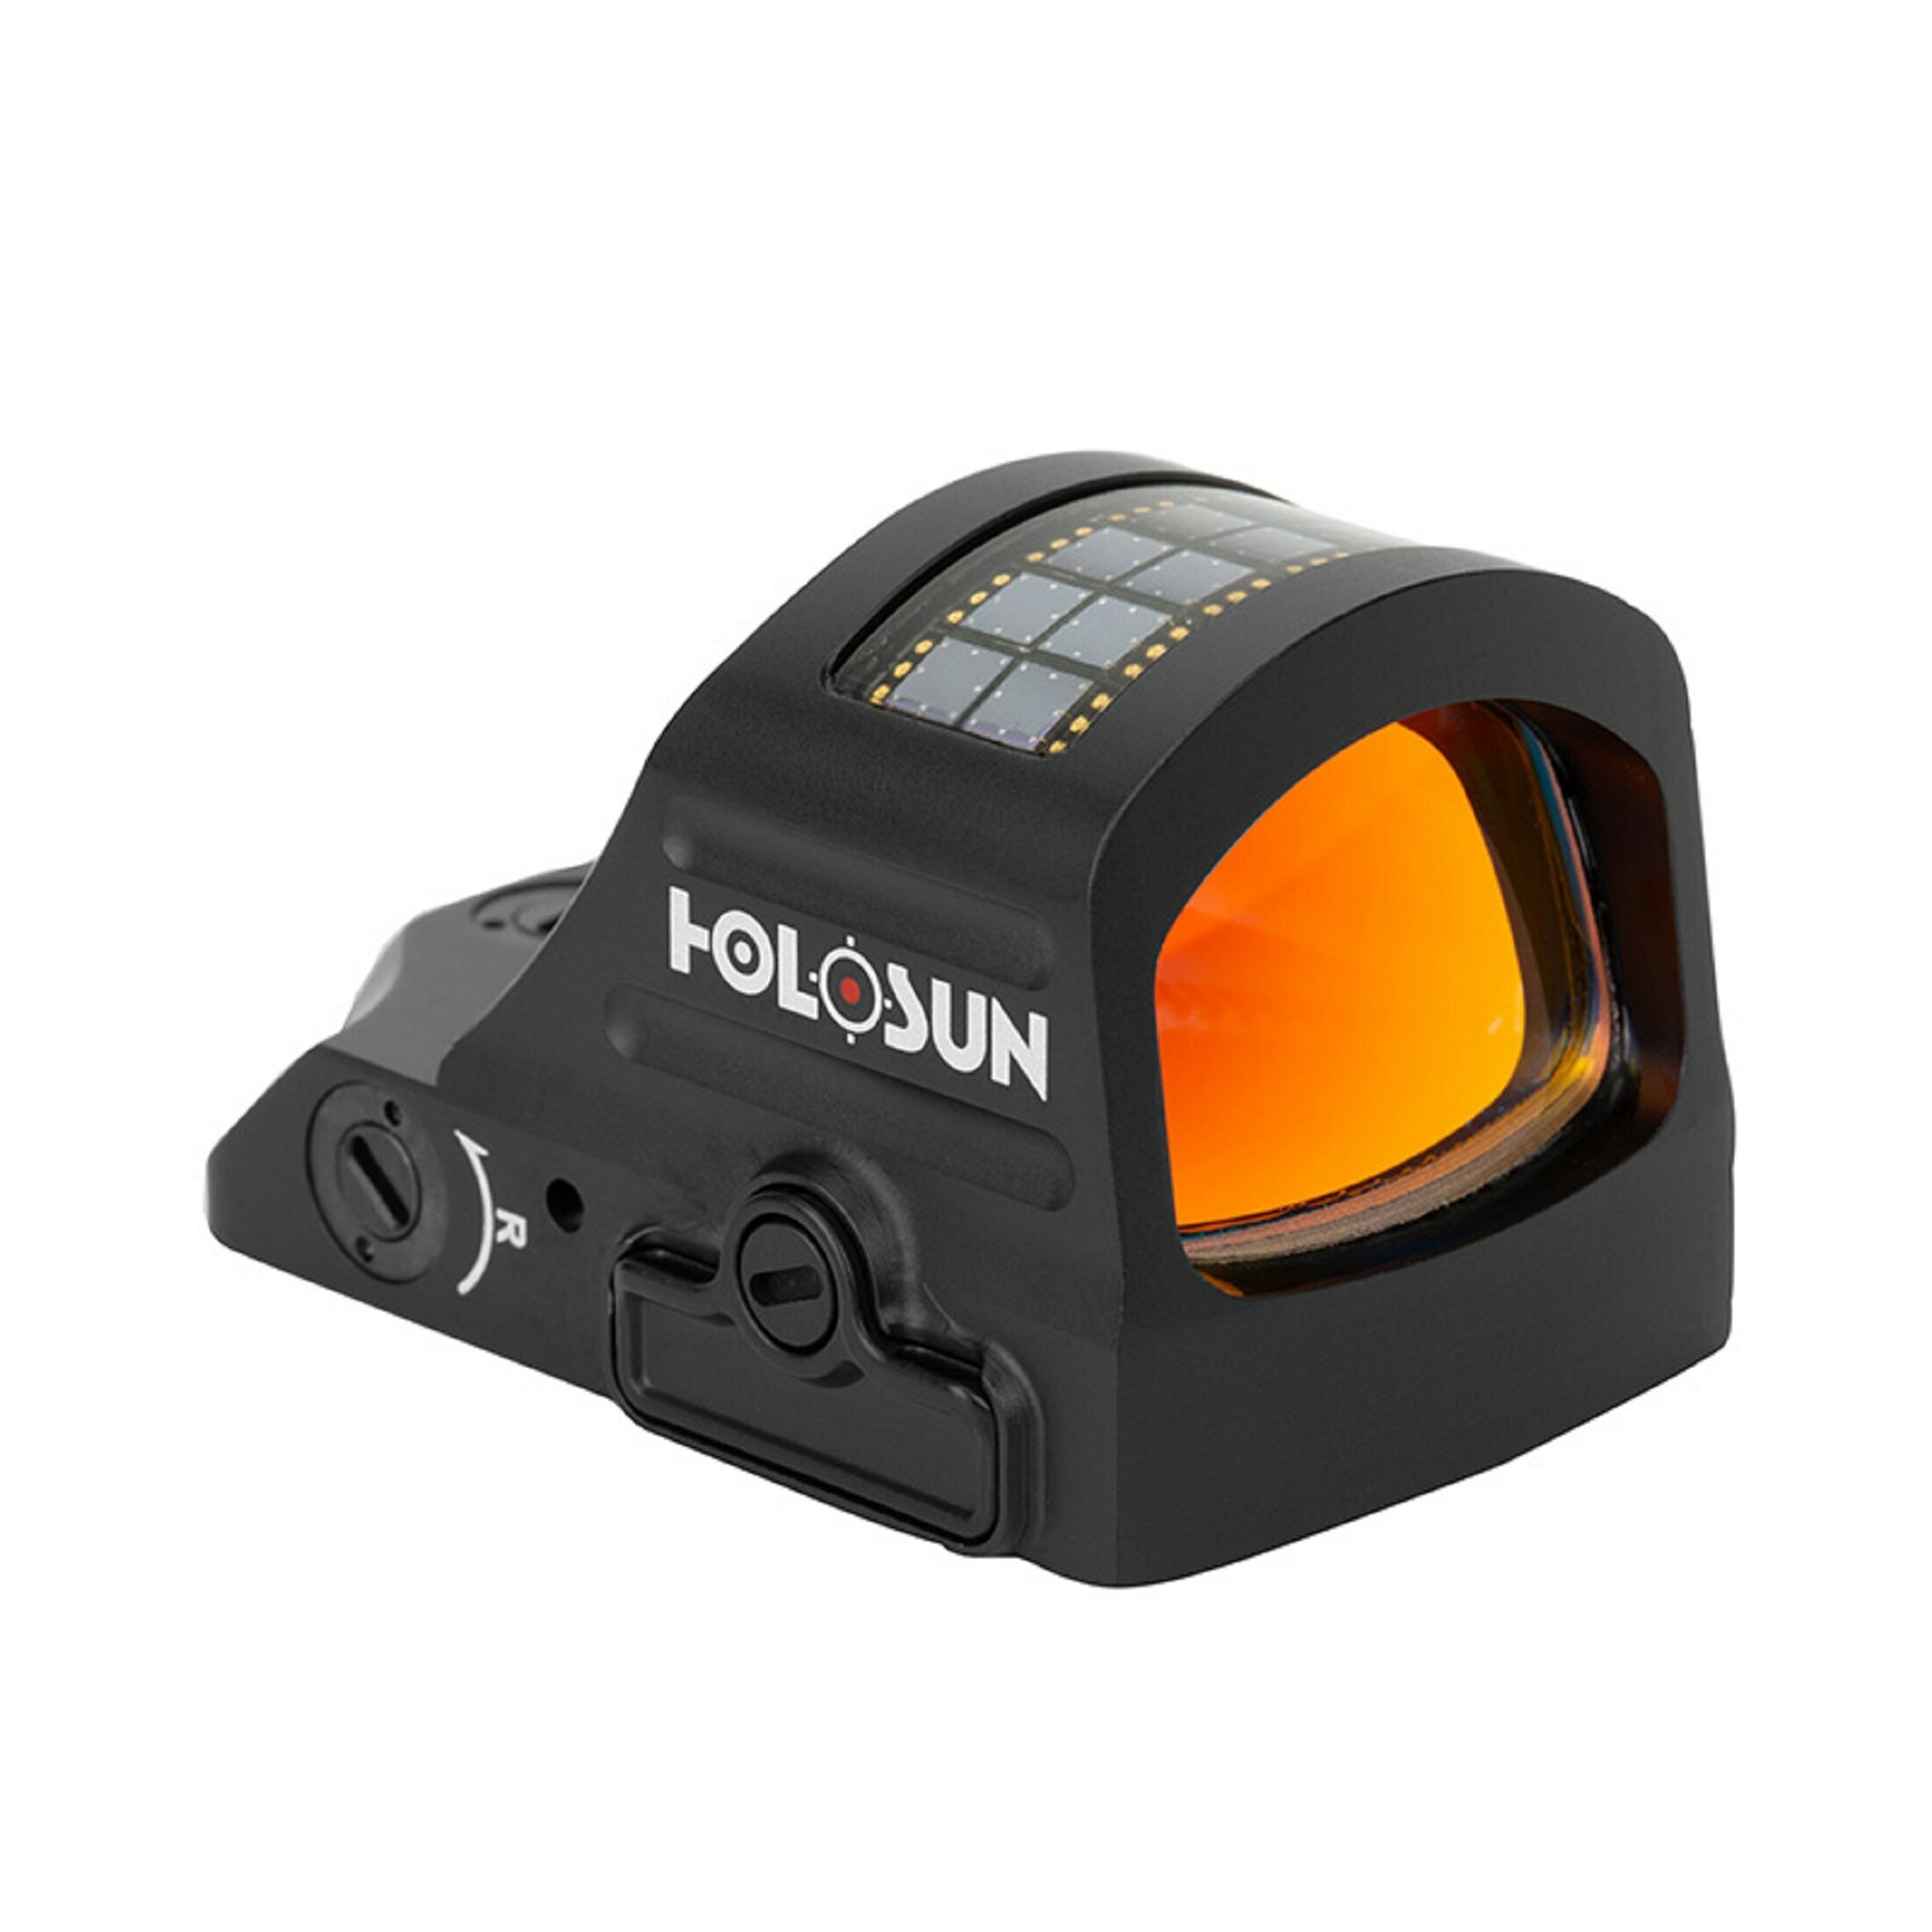 Holosun Dot Sight CLASSIC HS407C-X2-RENEWED